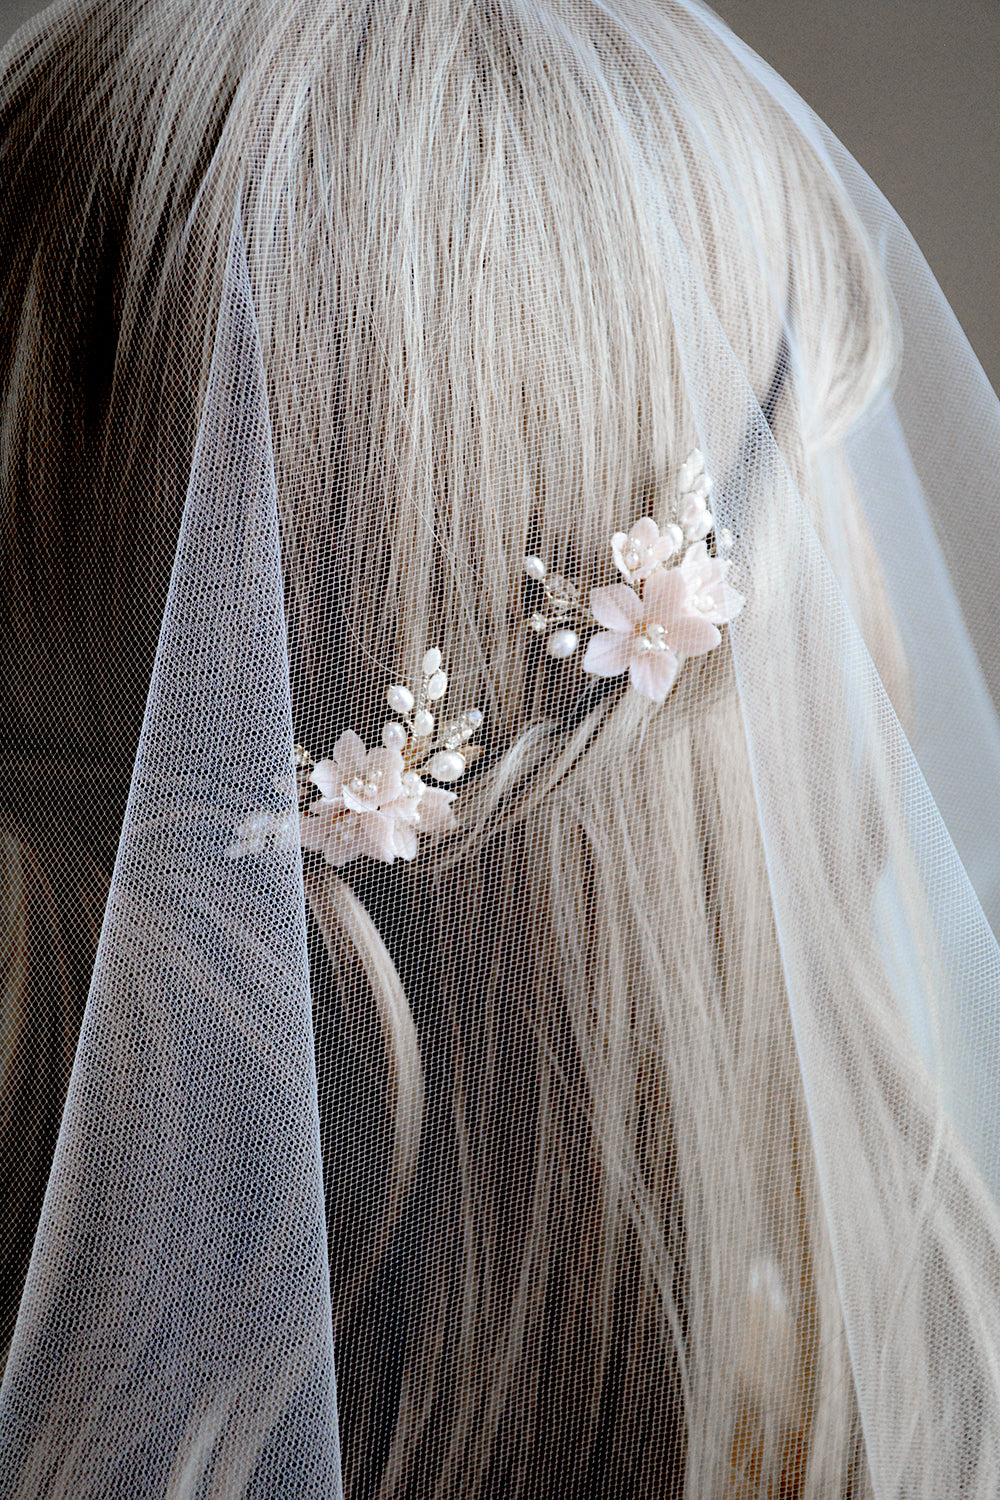 Blush bridal hair pins styled with veil.